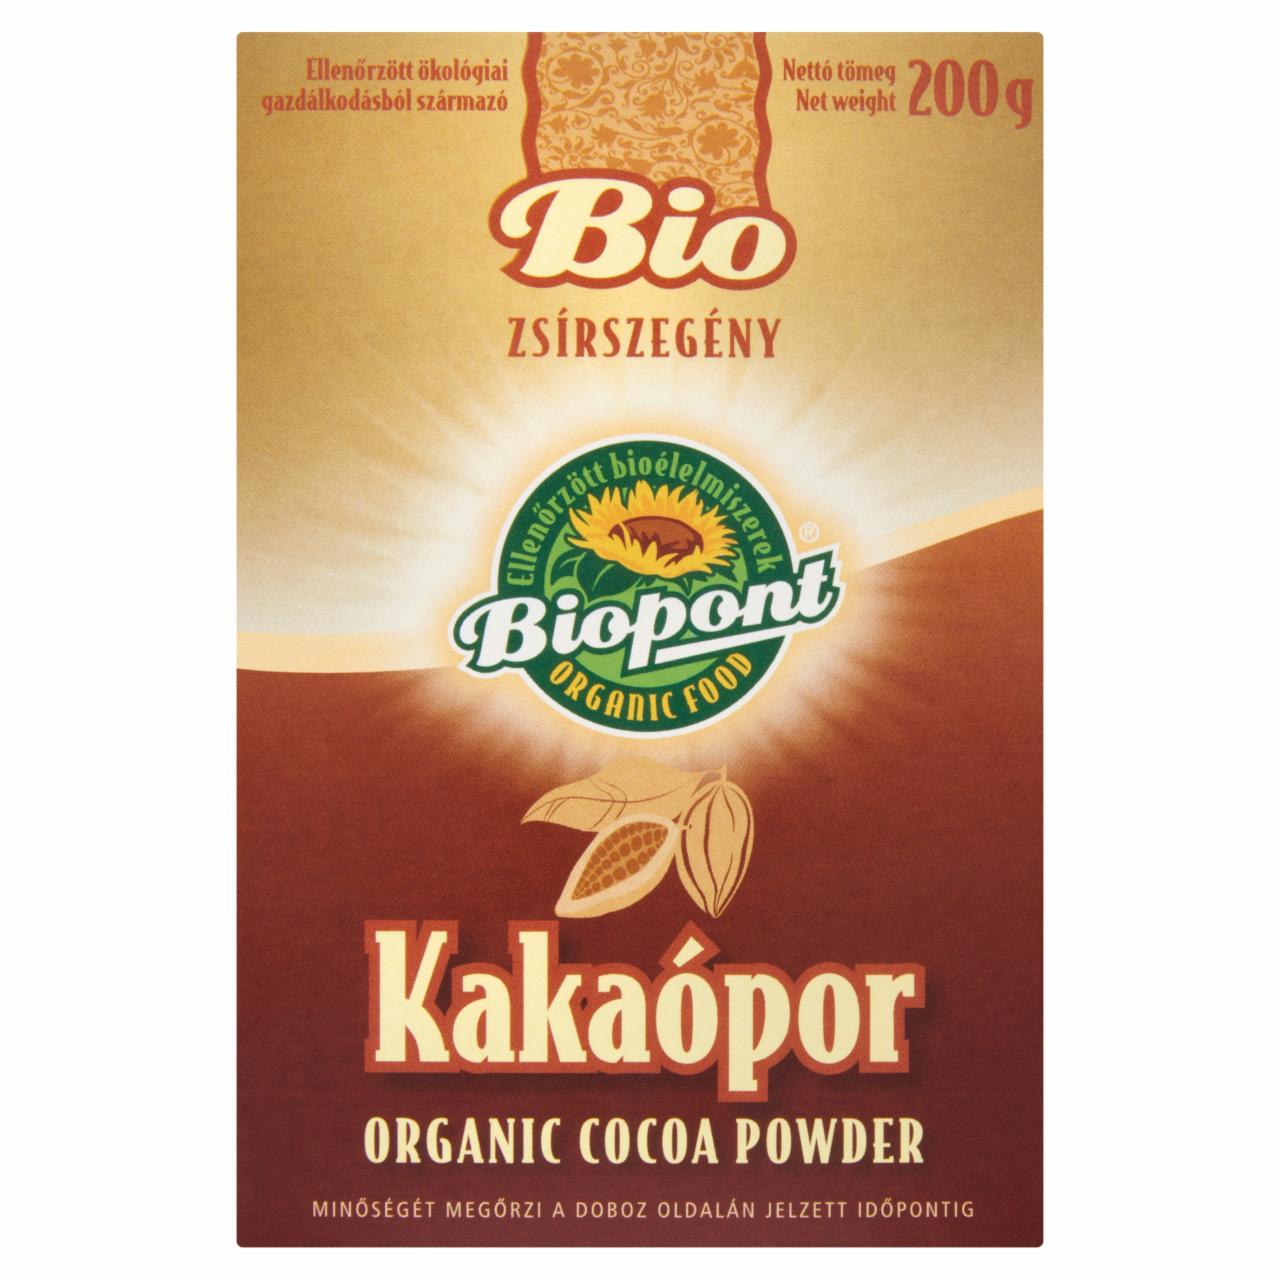 Képek - Biopont zsírszegény BIO kakaópor 200 g